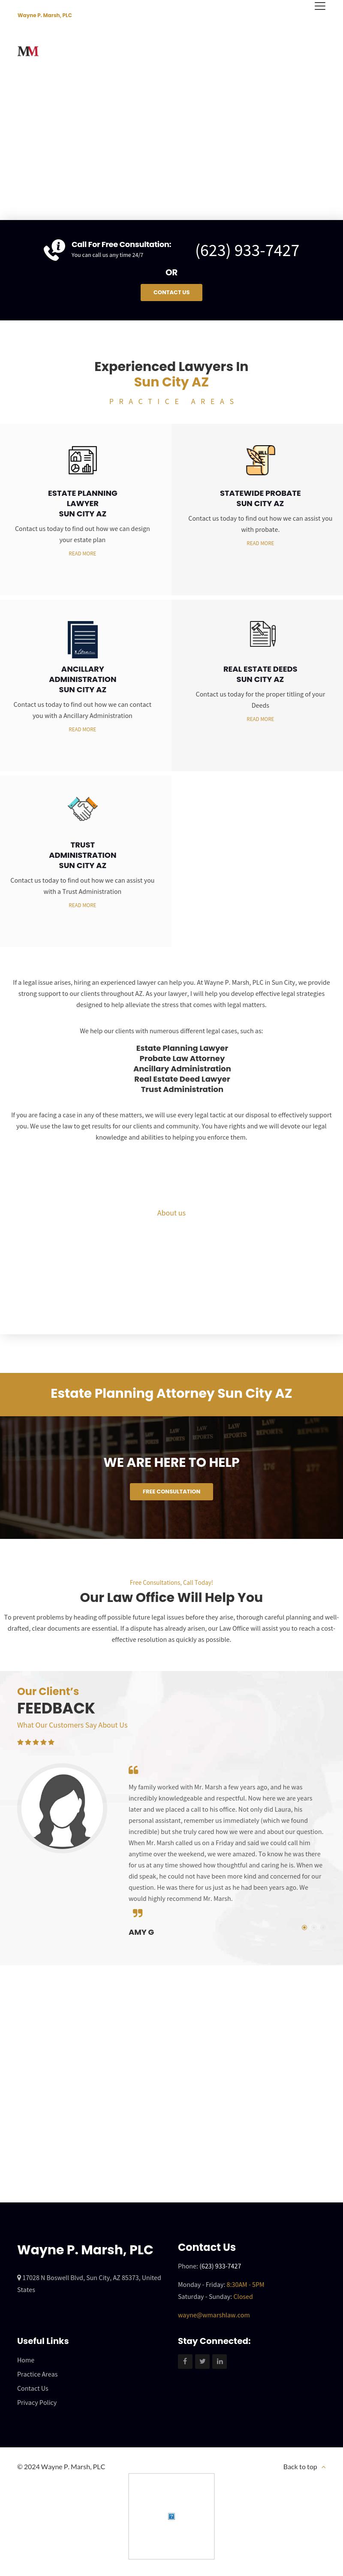 Wayne P. Marsh, PLC - Sun City AZ Lawyers